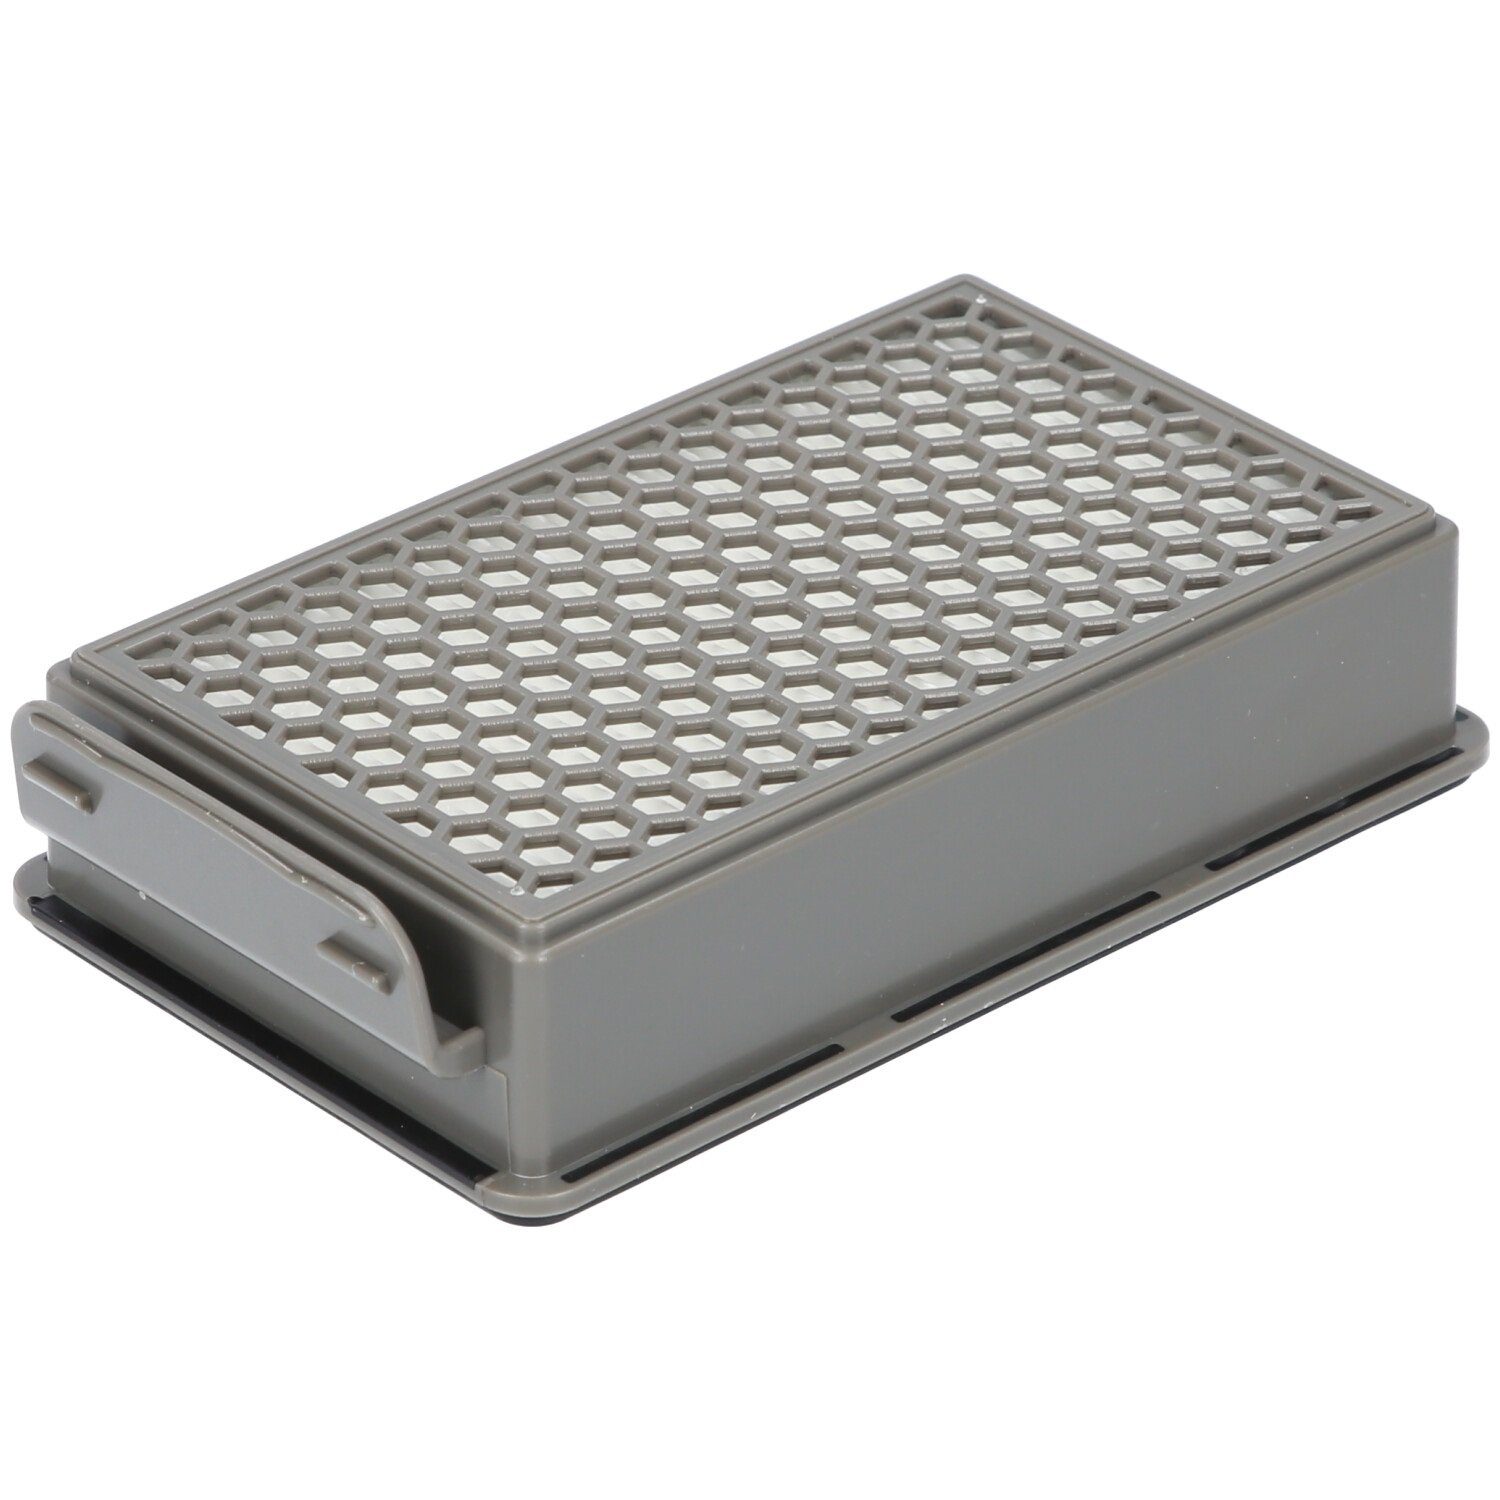 Tefal 1x McFilter 1x Rundfilter, Alternative für ZR005901 geeignet TW3985EA für / /TW3953EA / Filterkassette, TW3999EA, Filter-Set / TW3969EA TW3931EA